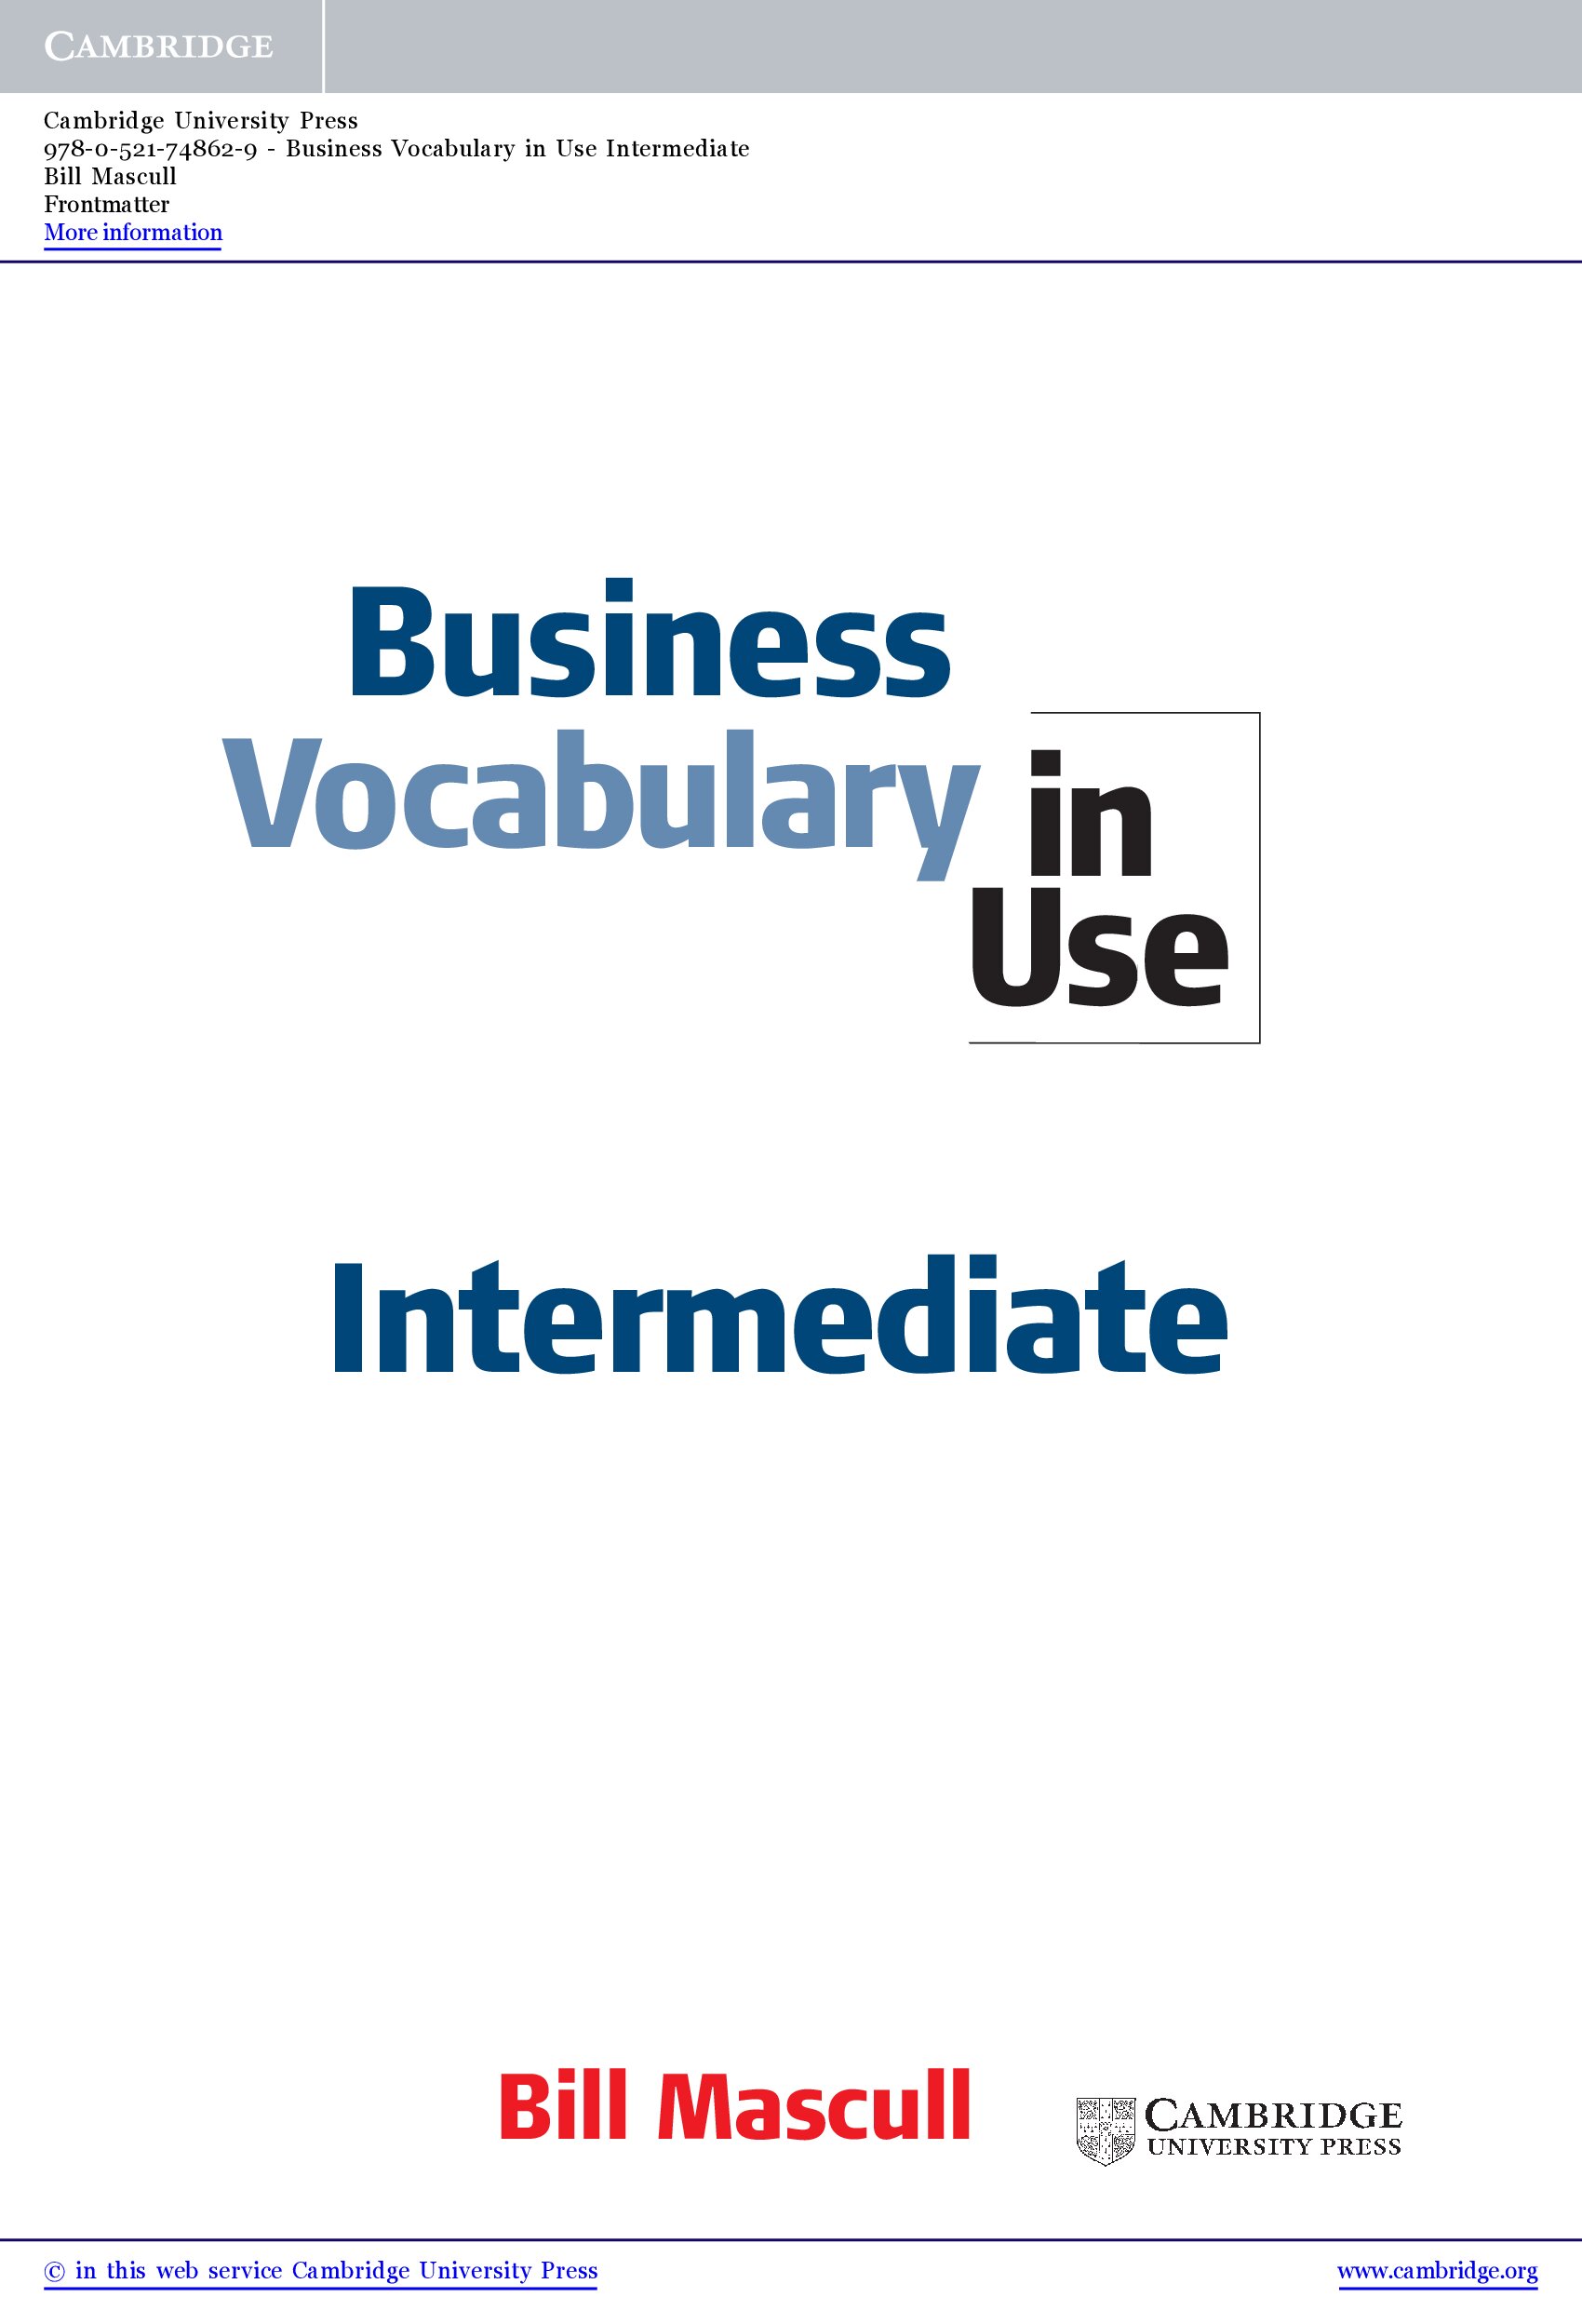 Business Vocabulary in use intermediate